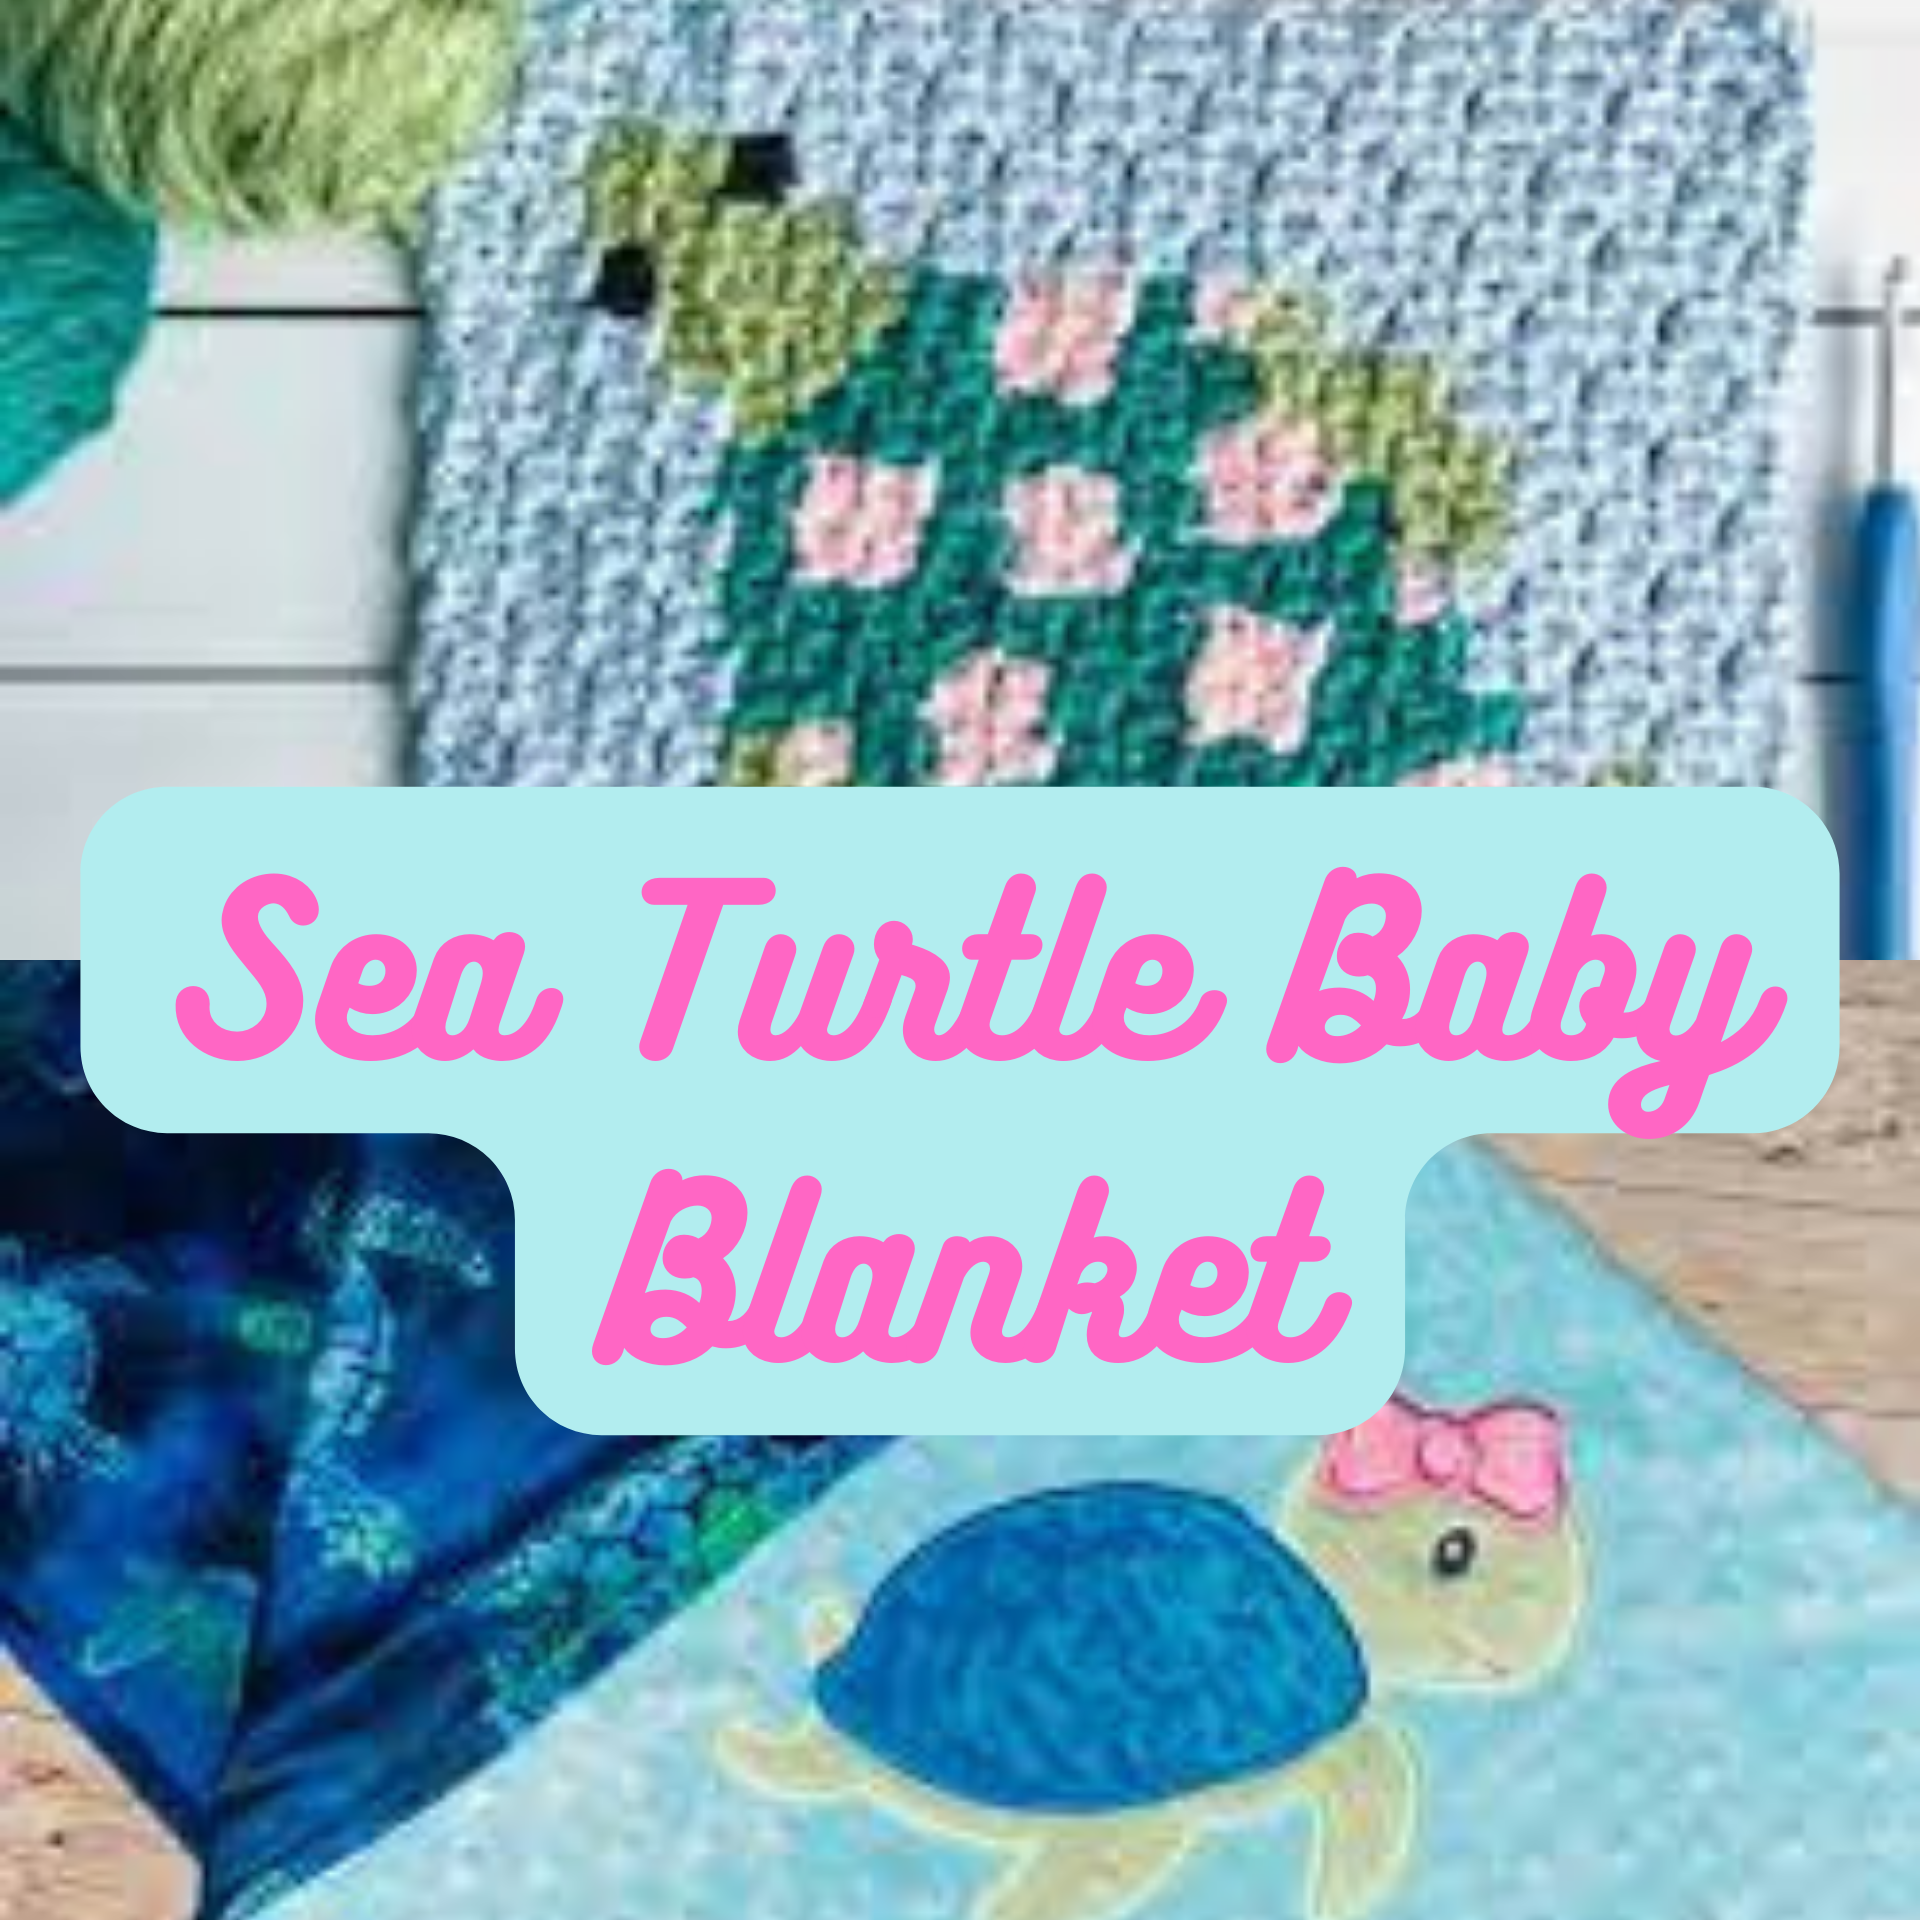 Sea Turtle Baby Blanket